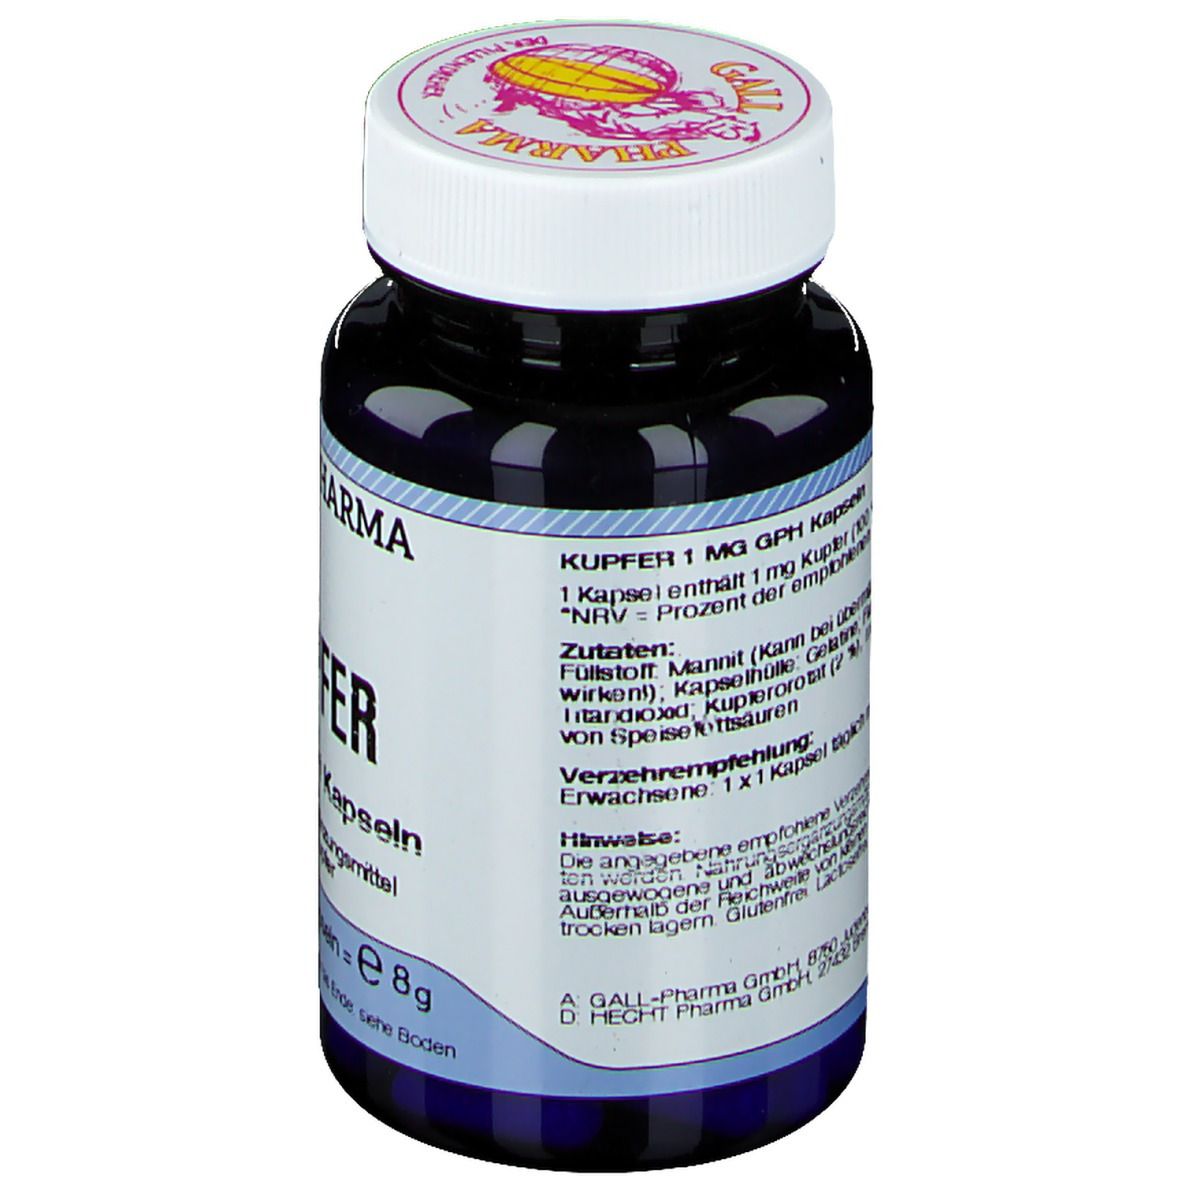 GALL PHARMA Kupfer 1 mg GPH